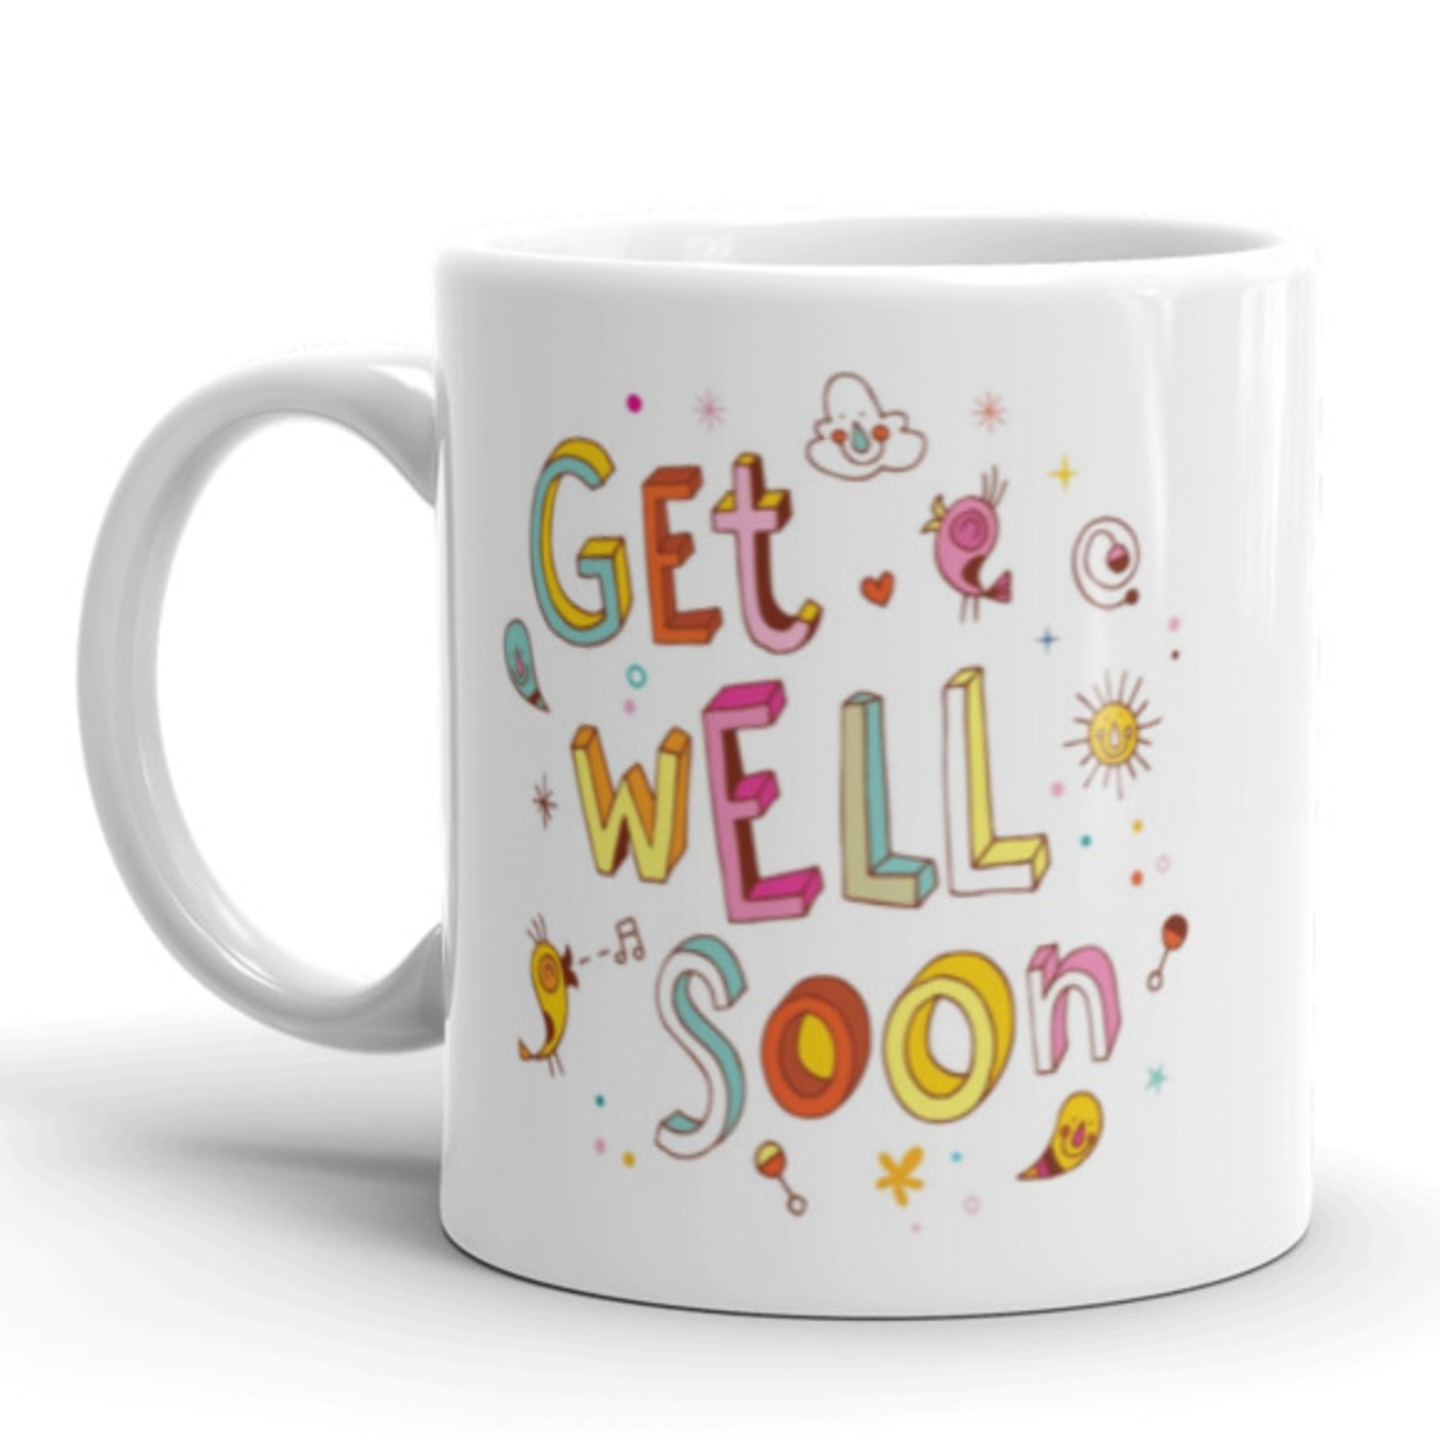 Ceramic Mug - Get well soon